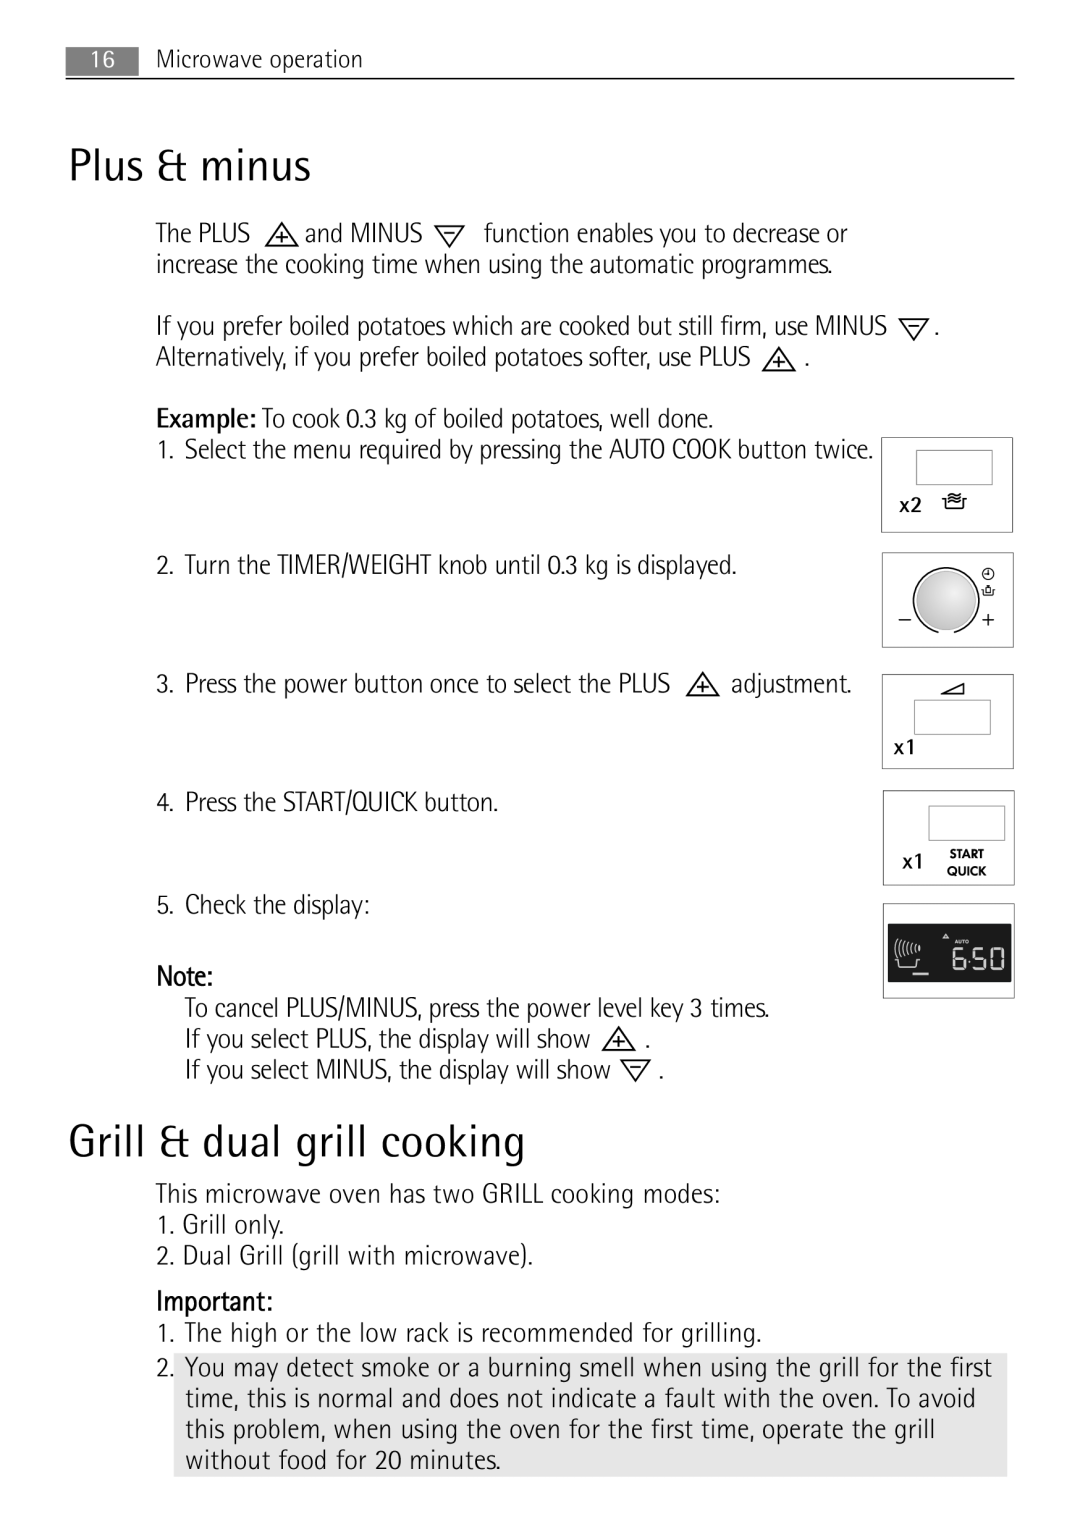 AEG MCD2662E user manual Plus & minus, Grill & dual grill cooking 